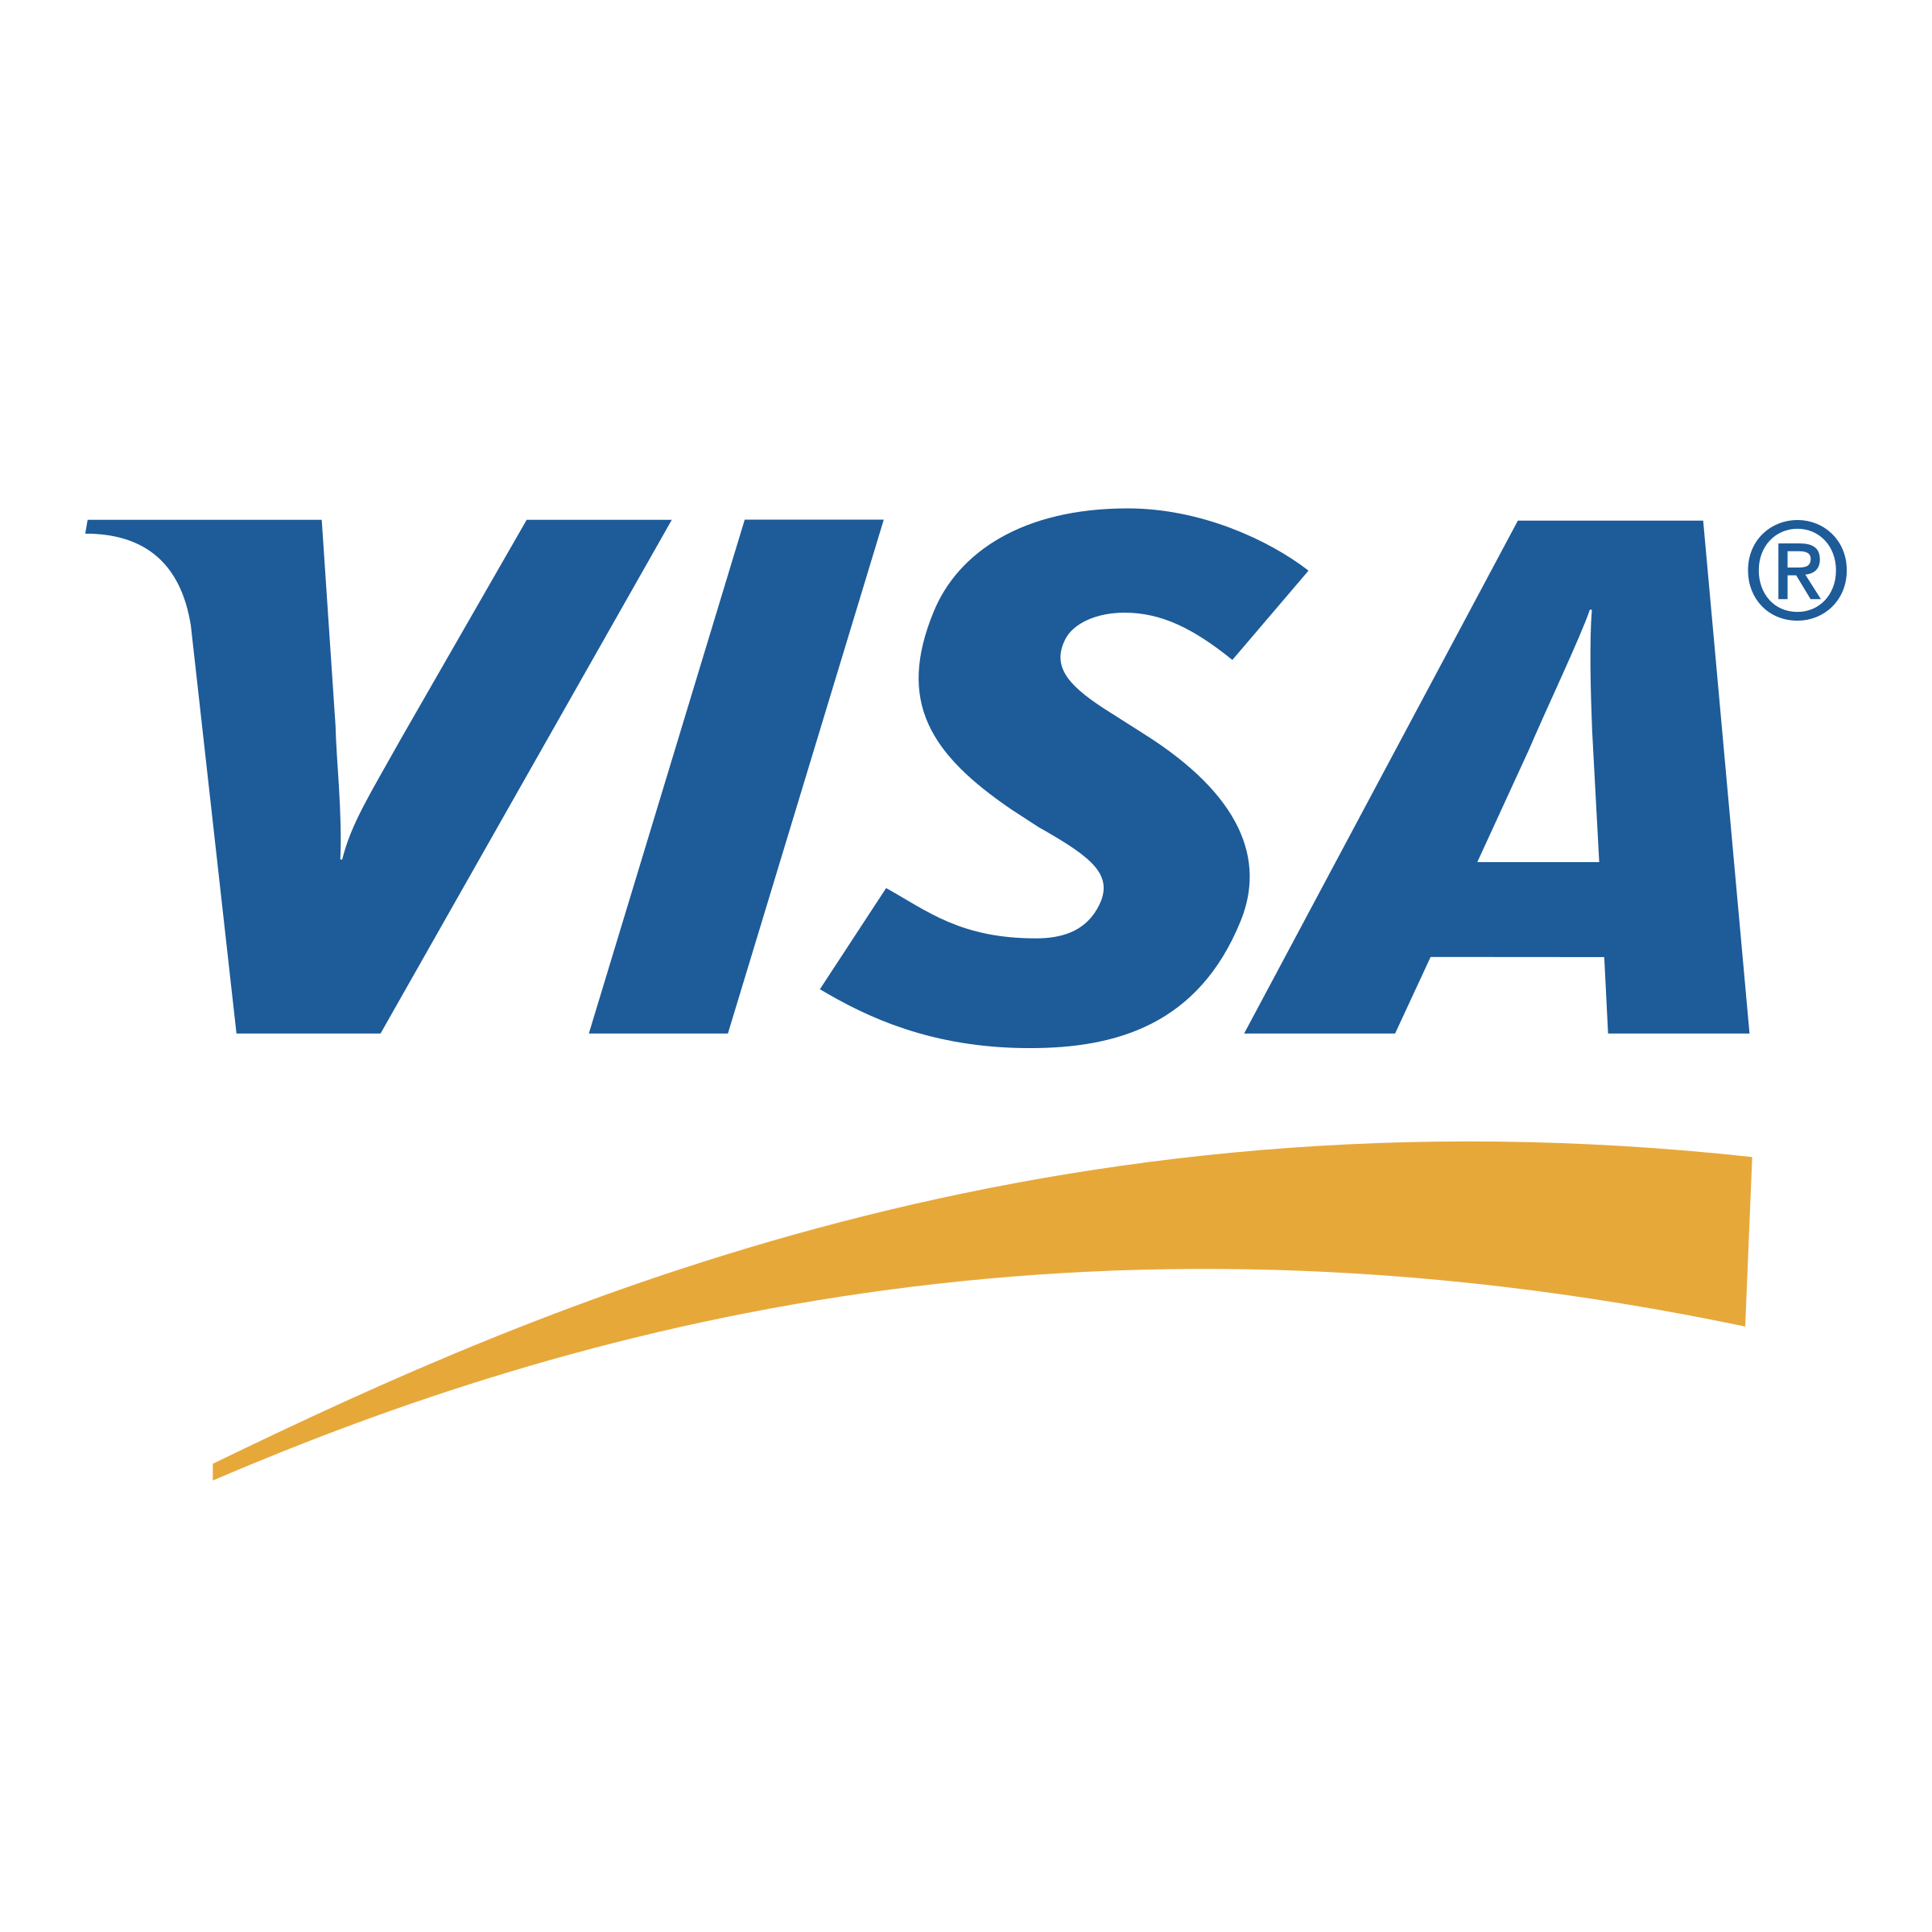 Download Visa Logo Png Image 